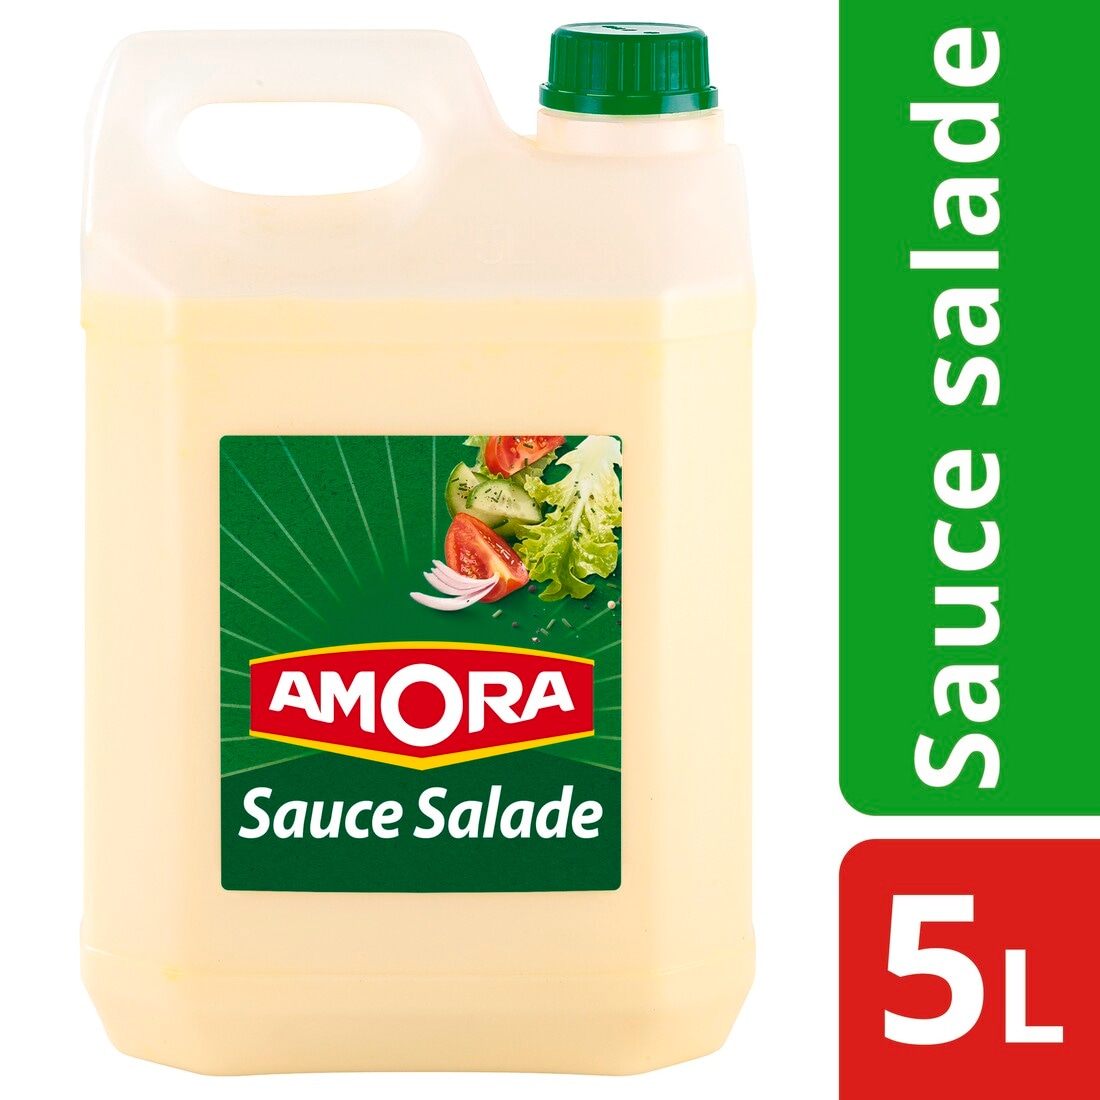 Amora Sauce Salade Bidon 5L - 